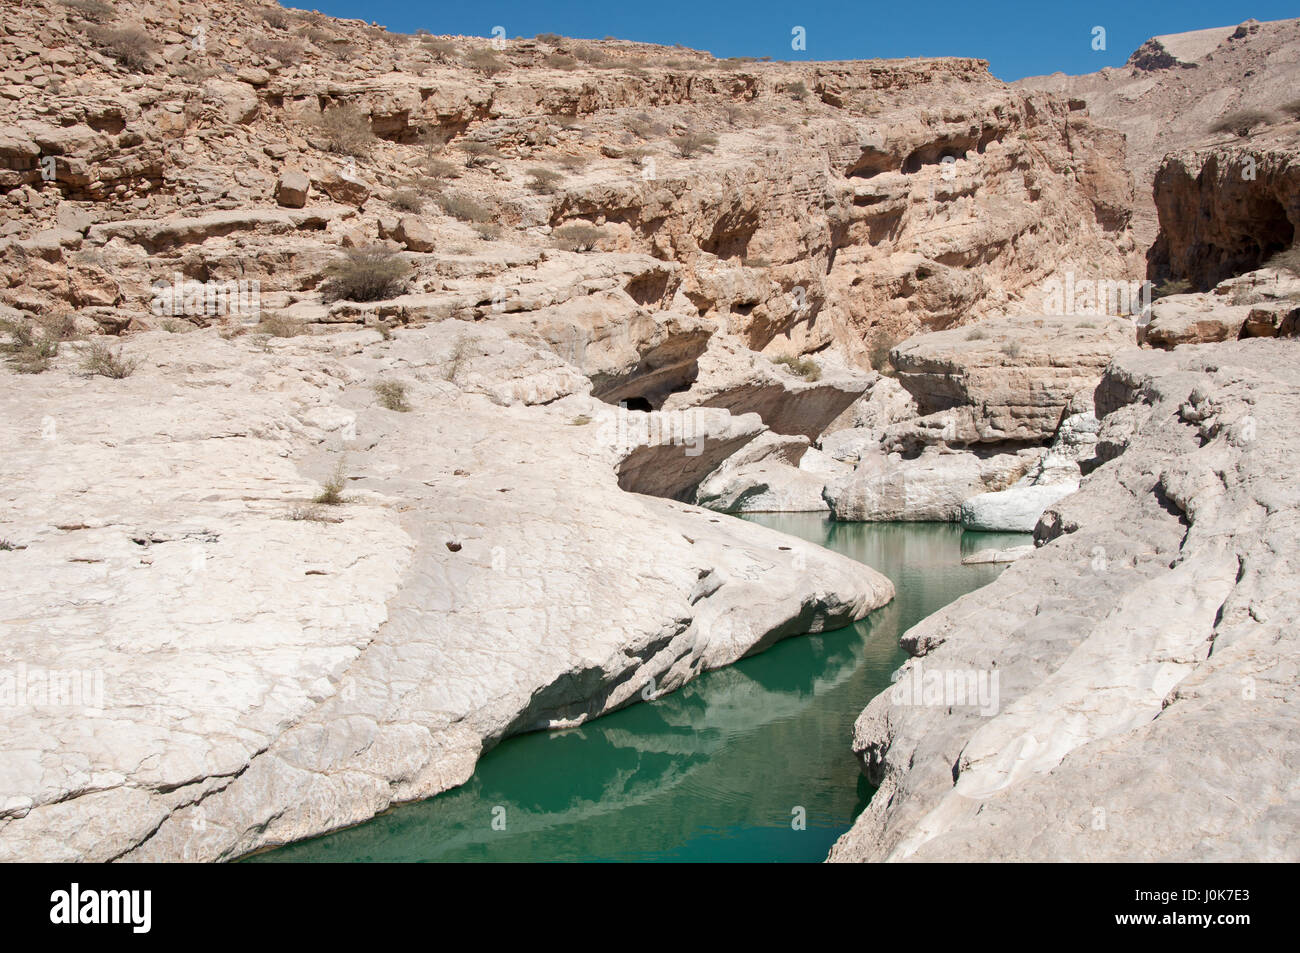 Wadi Bani Khalid - Water source in the desert - Omani oasis Stock Photo